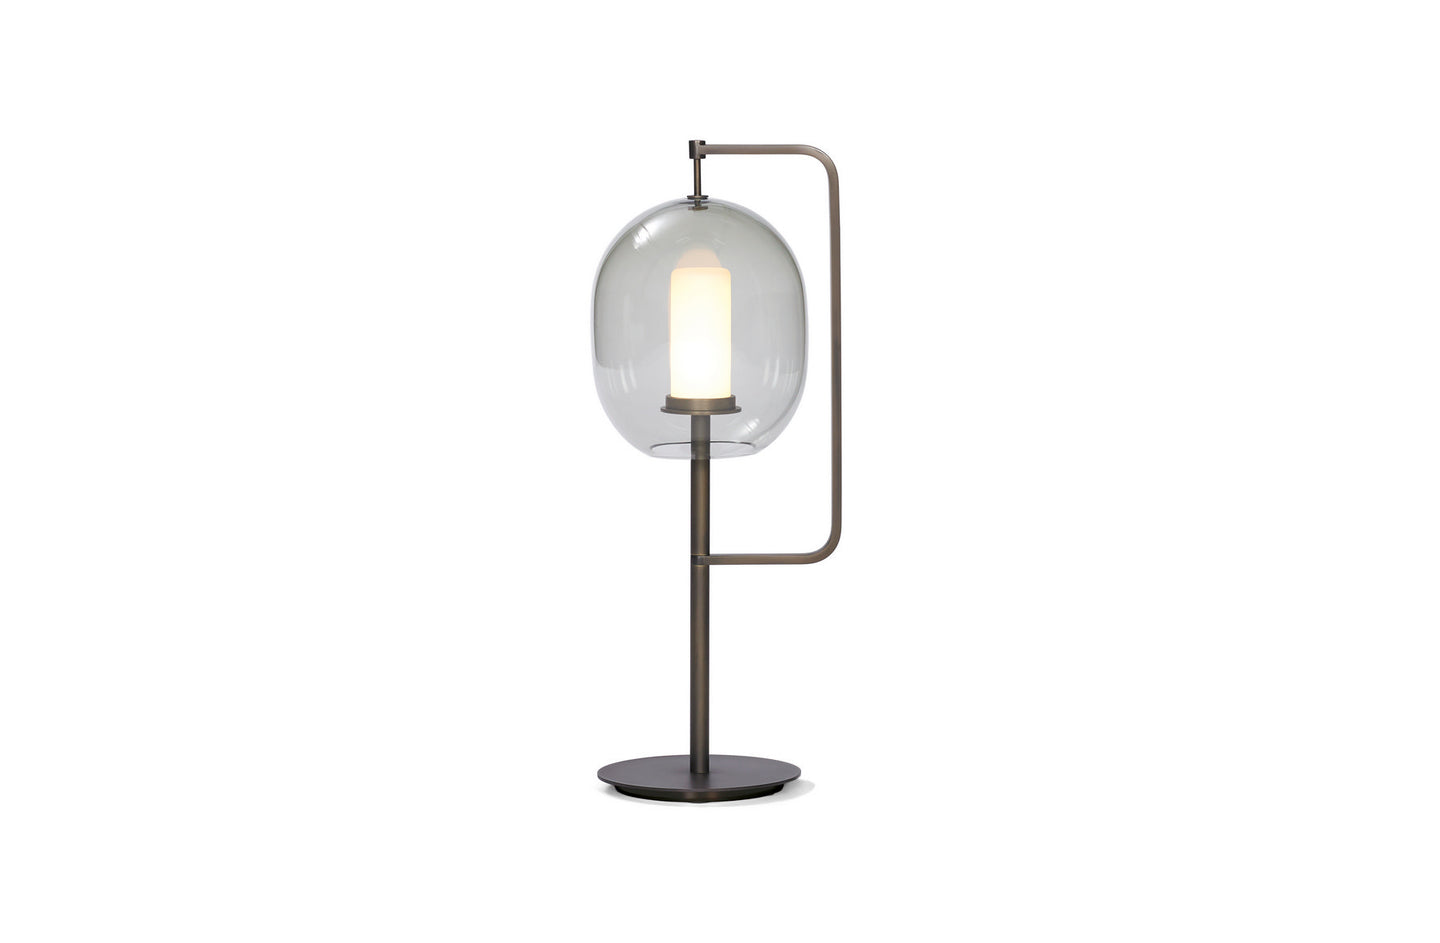 Lantern Light Table Lamp
